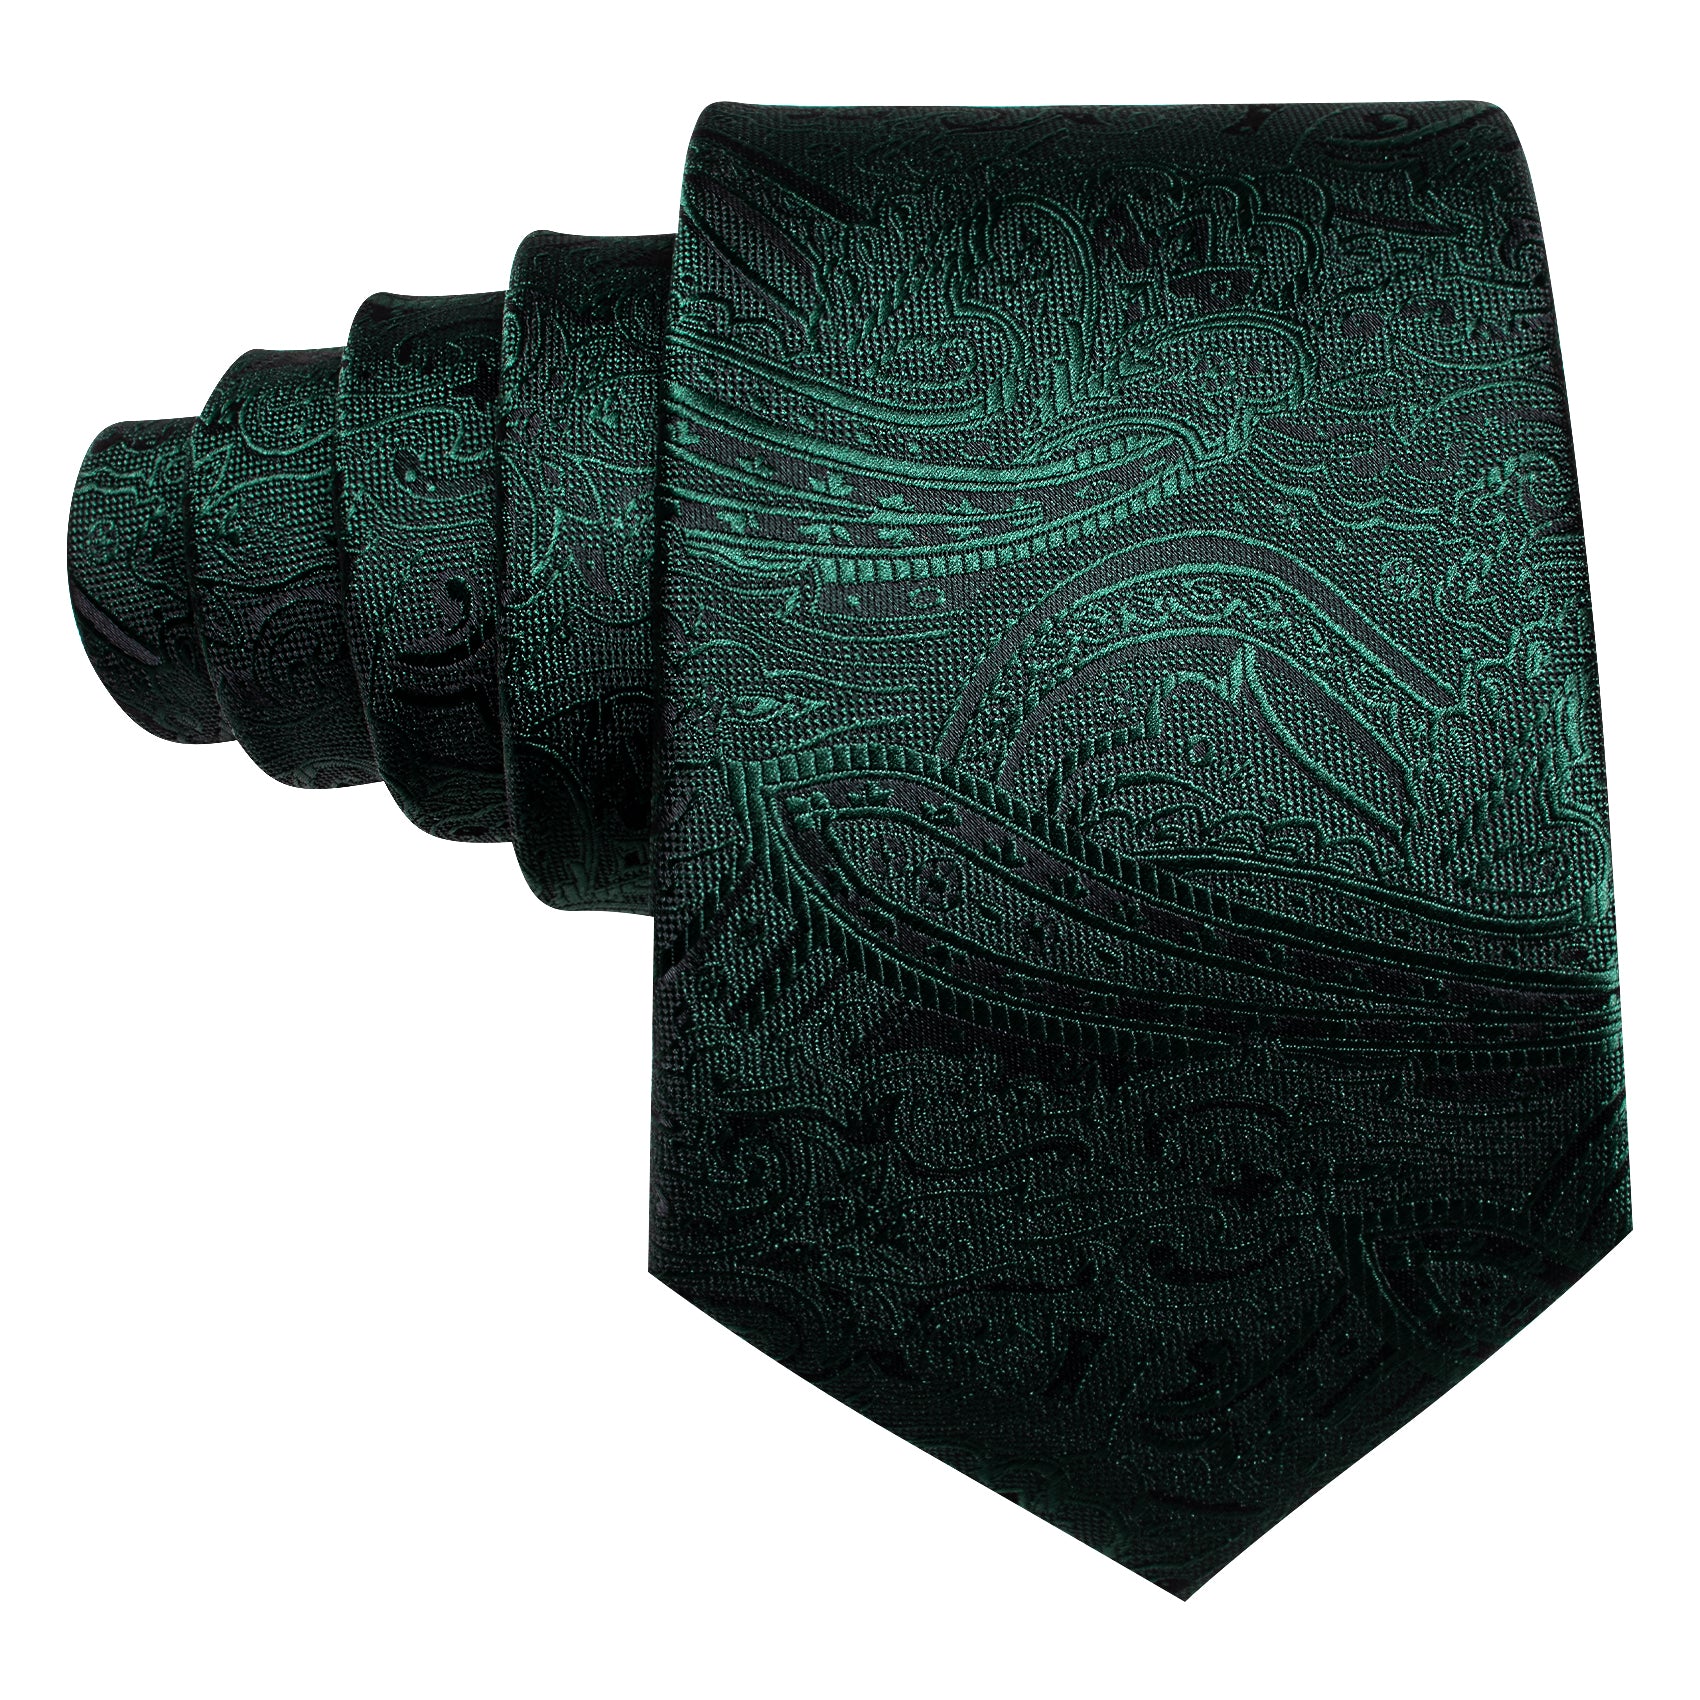 Barry Wang Green Tie Jacquard Paisley Silk Men's Tie Hanky Cufflinks Set